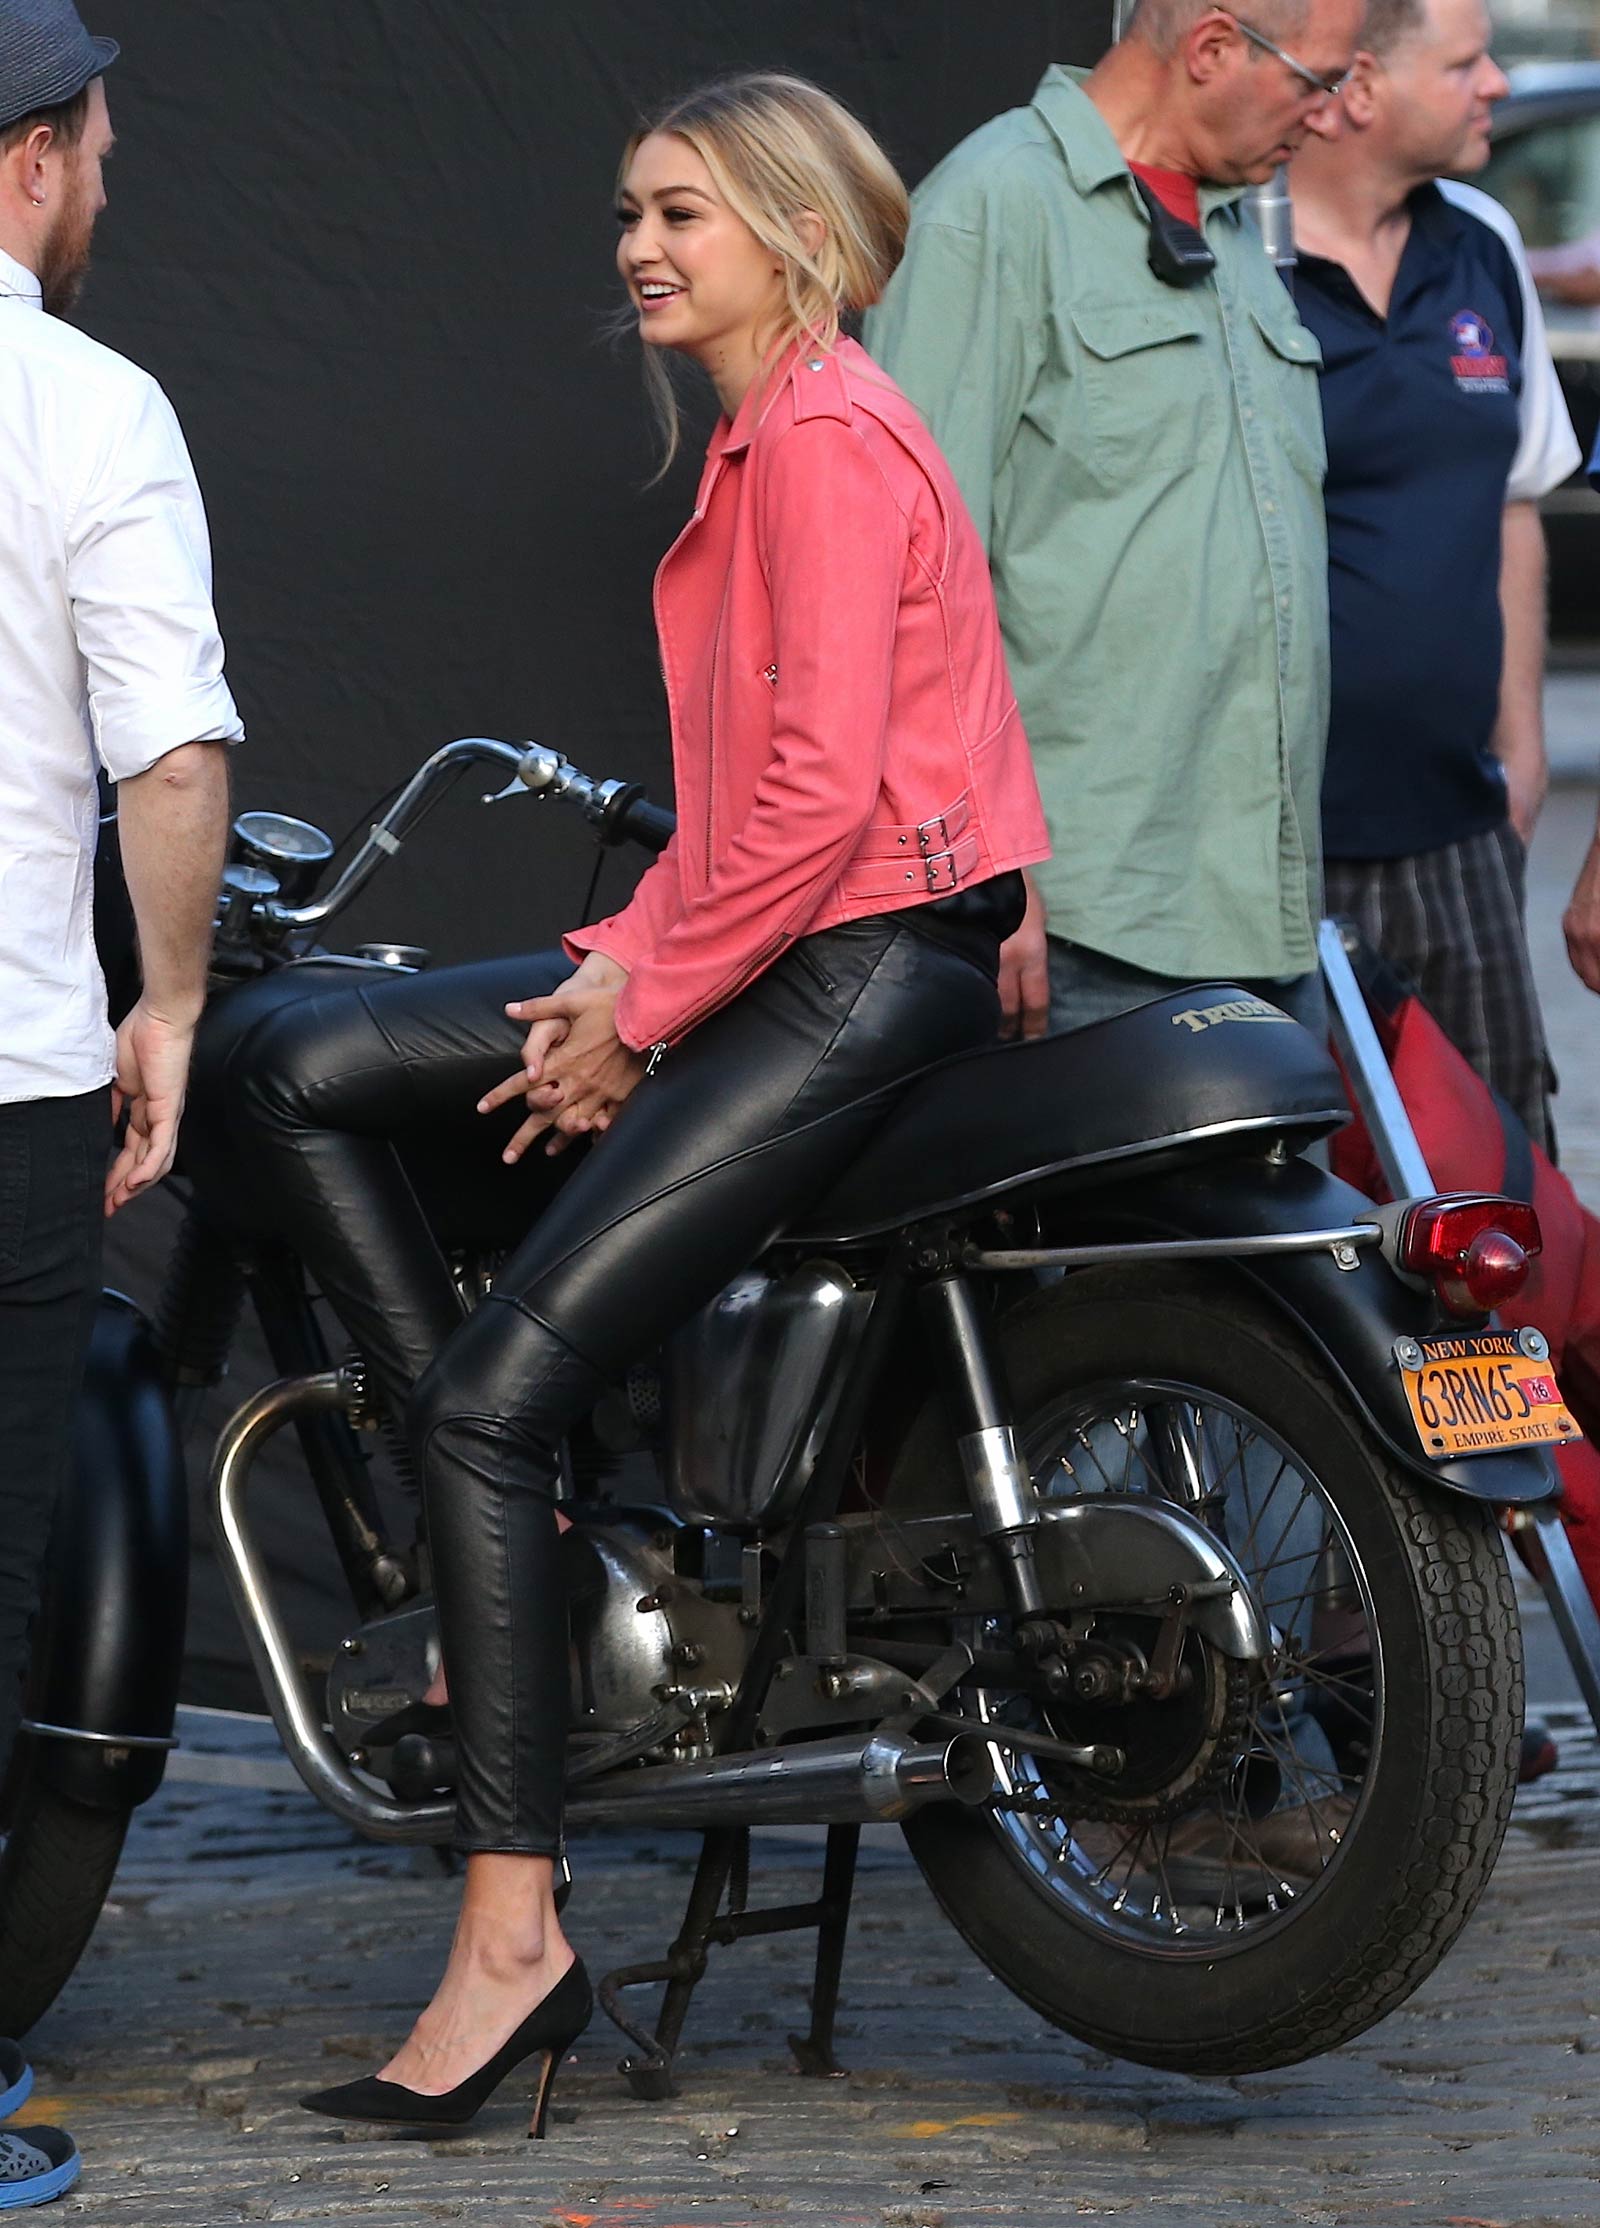 Gigi Hadid is seen on a photo shoot in New York City